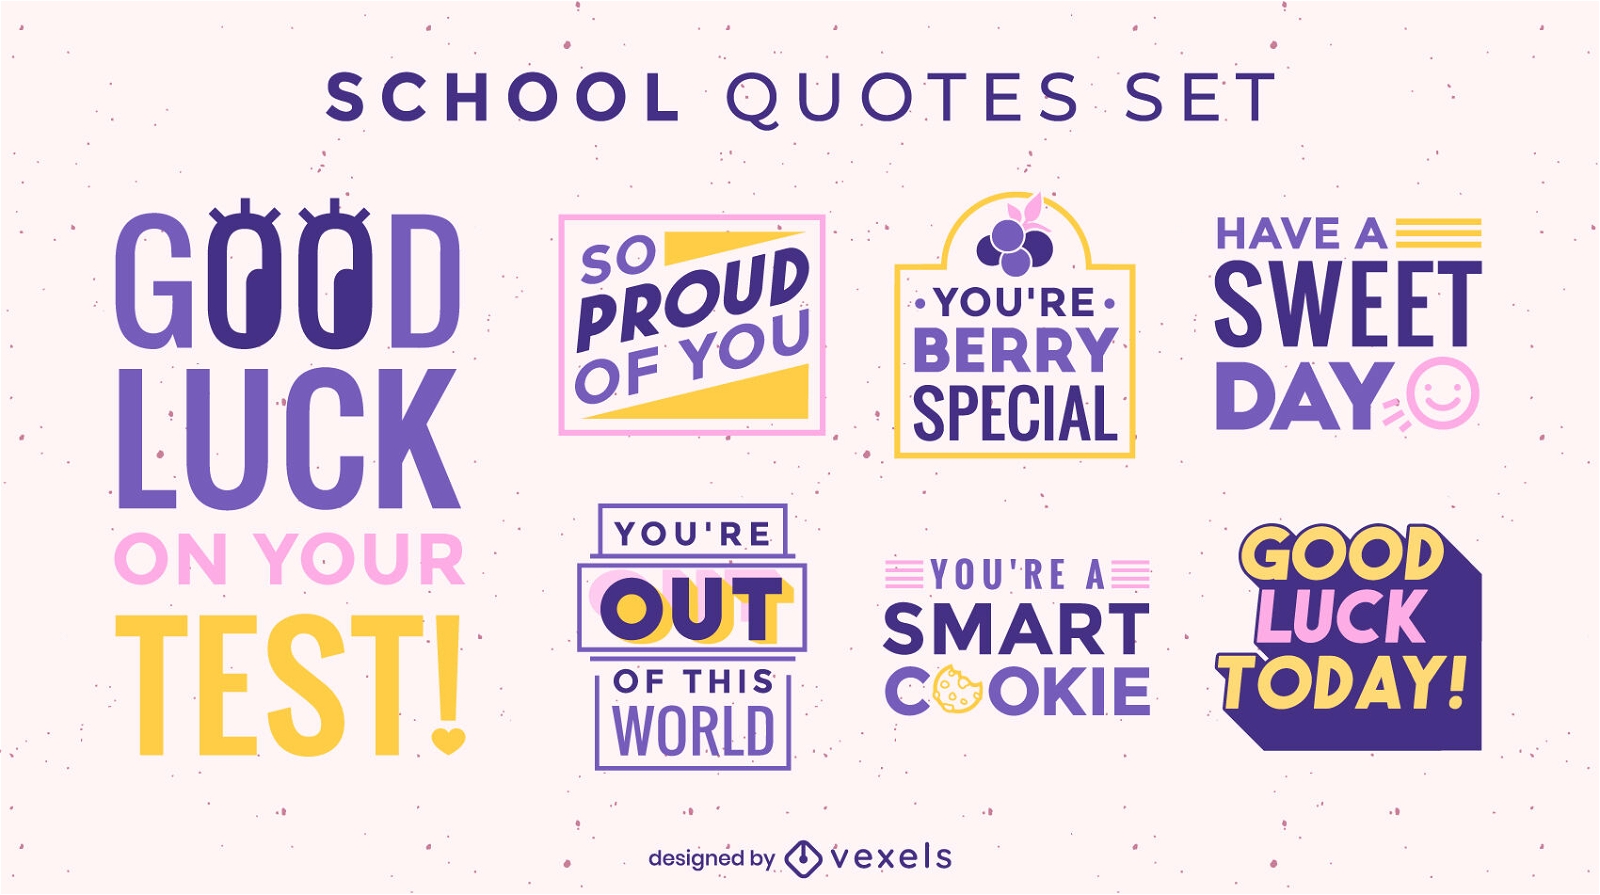 motivational school quotes